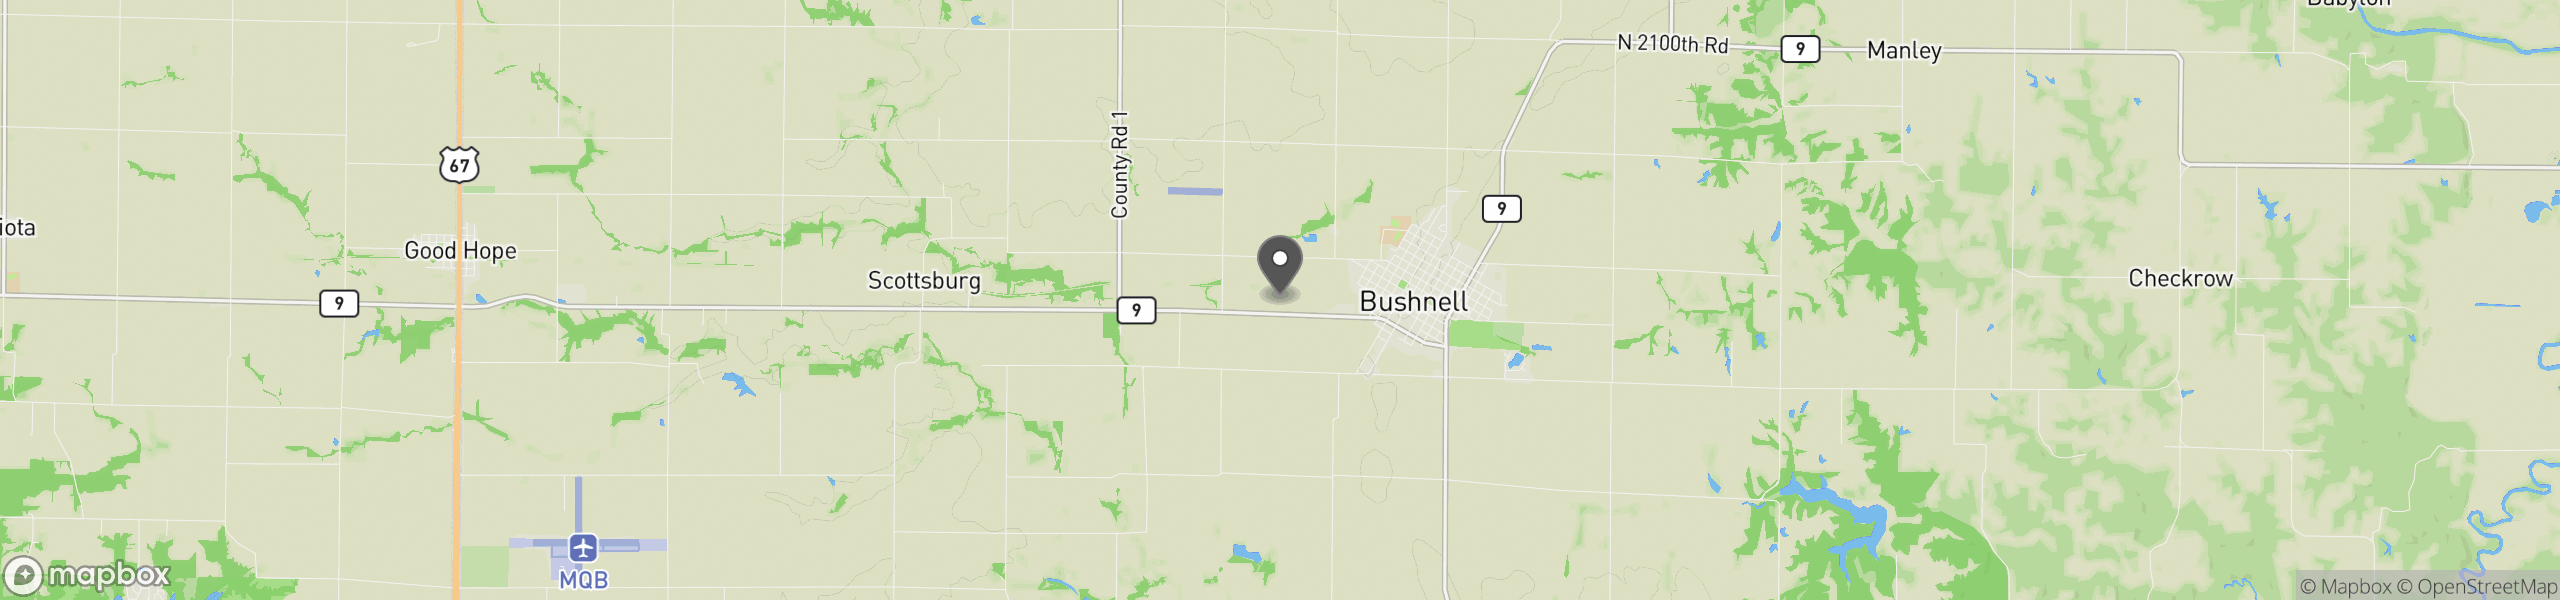 Bushnell, IL 61422